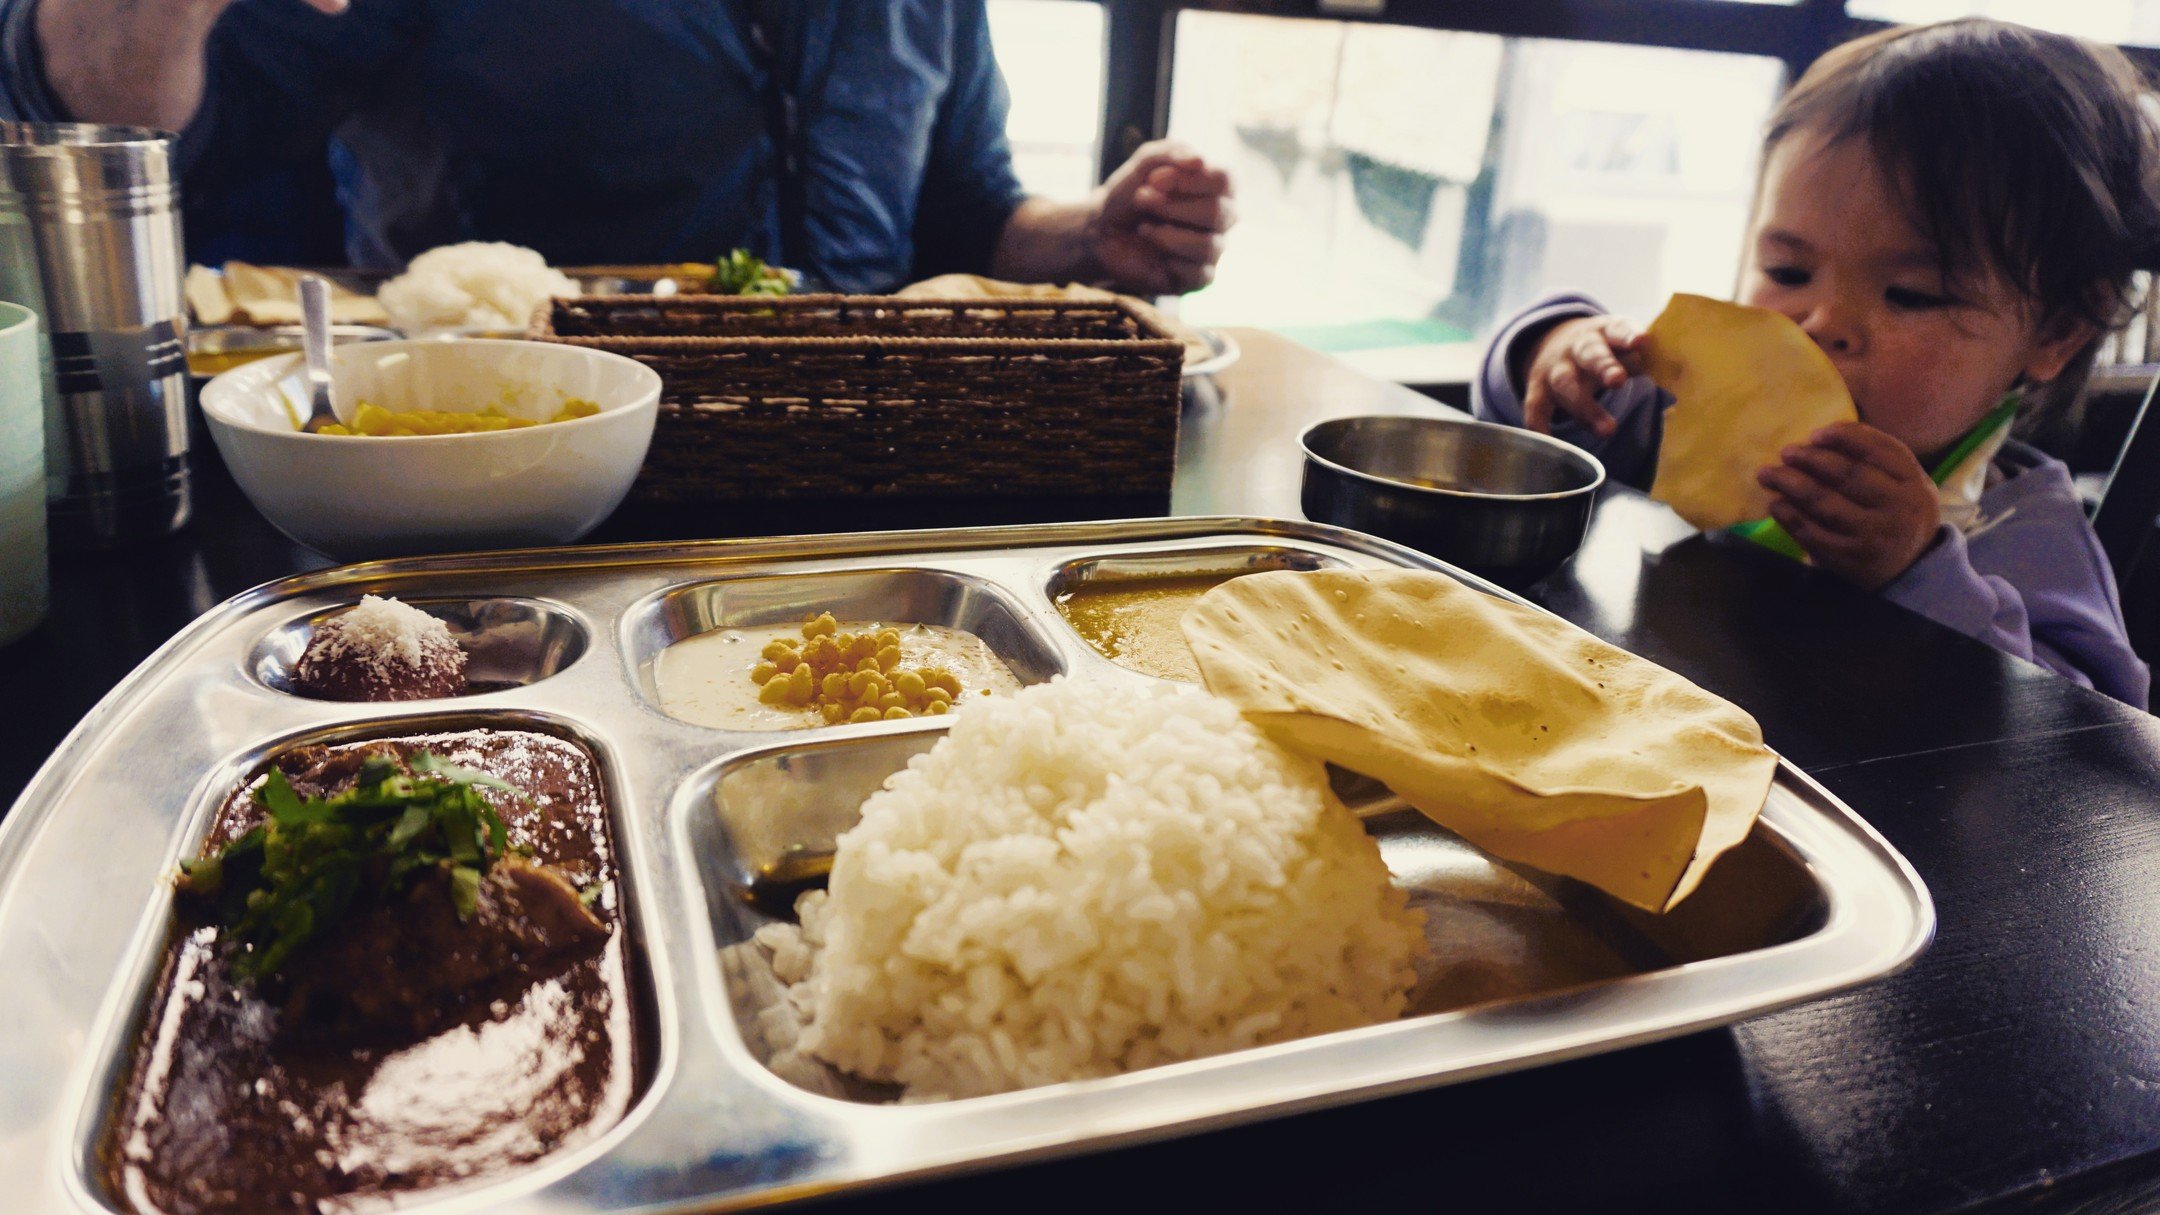 Lunch at the best damn Indian in Nagano. Hana-chan's now addicted to papadum
@doon.shokudo.indoyama 

#Matsumoto #doonshokudoindoyama #indianfoodinjapan #松本市 #DOON食堂印度山